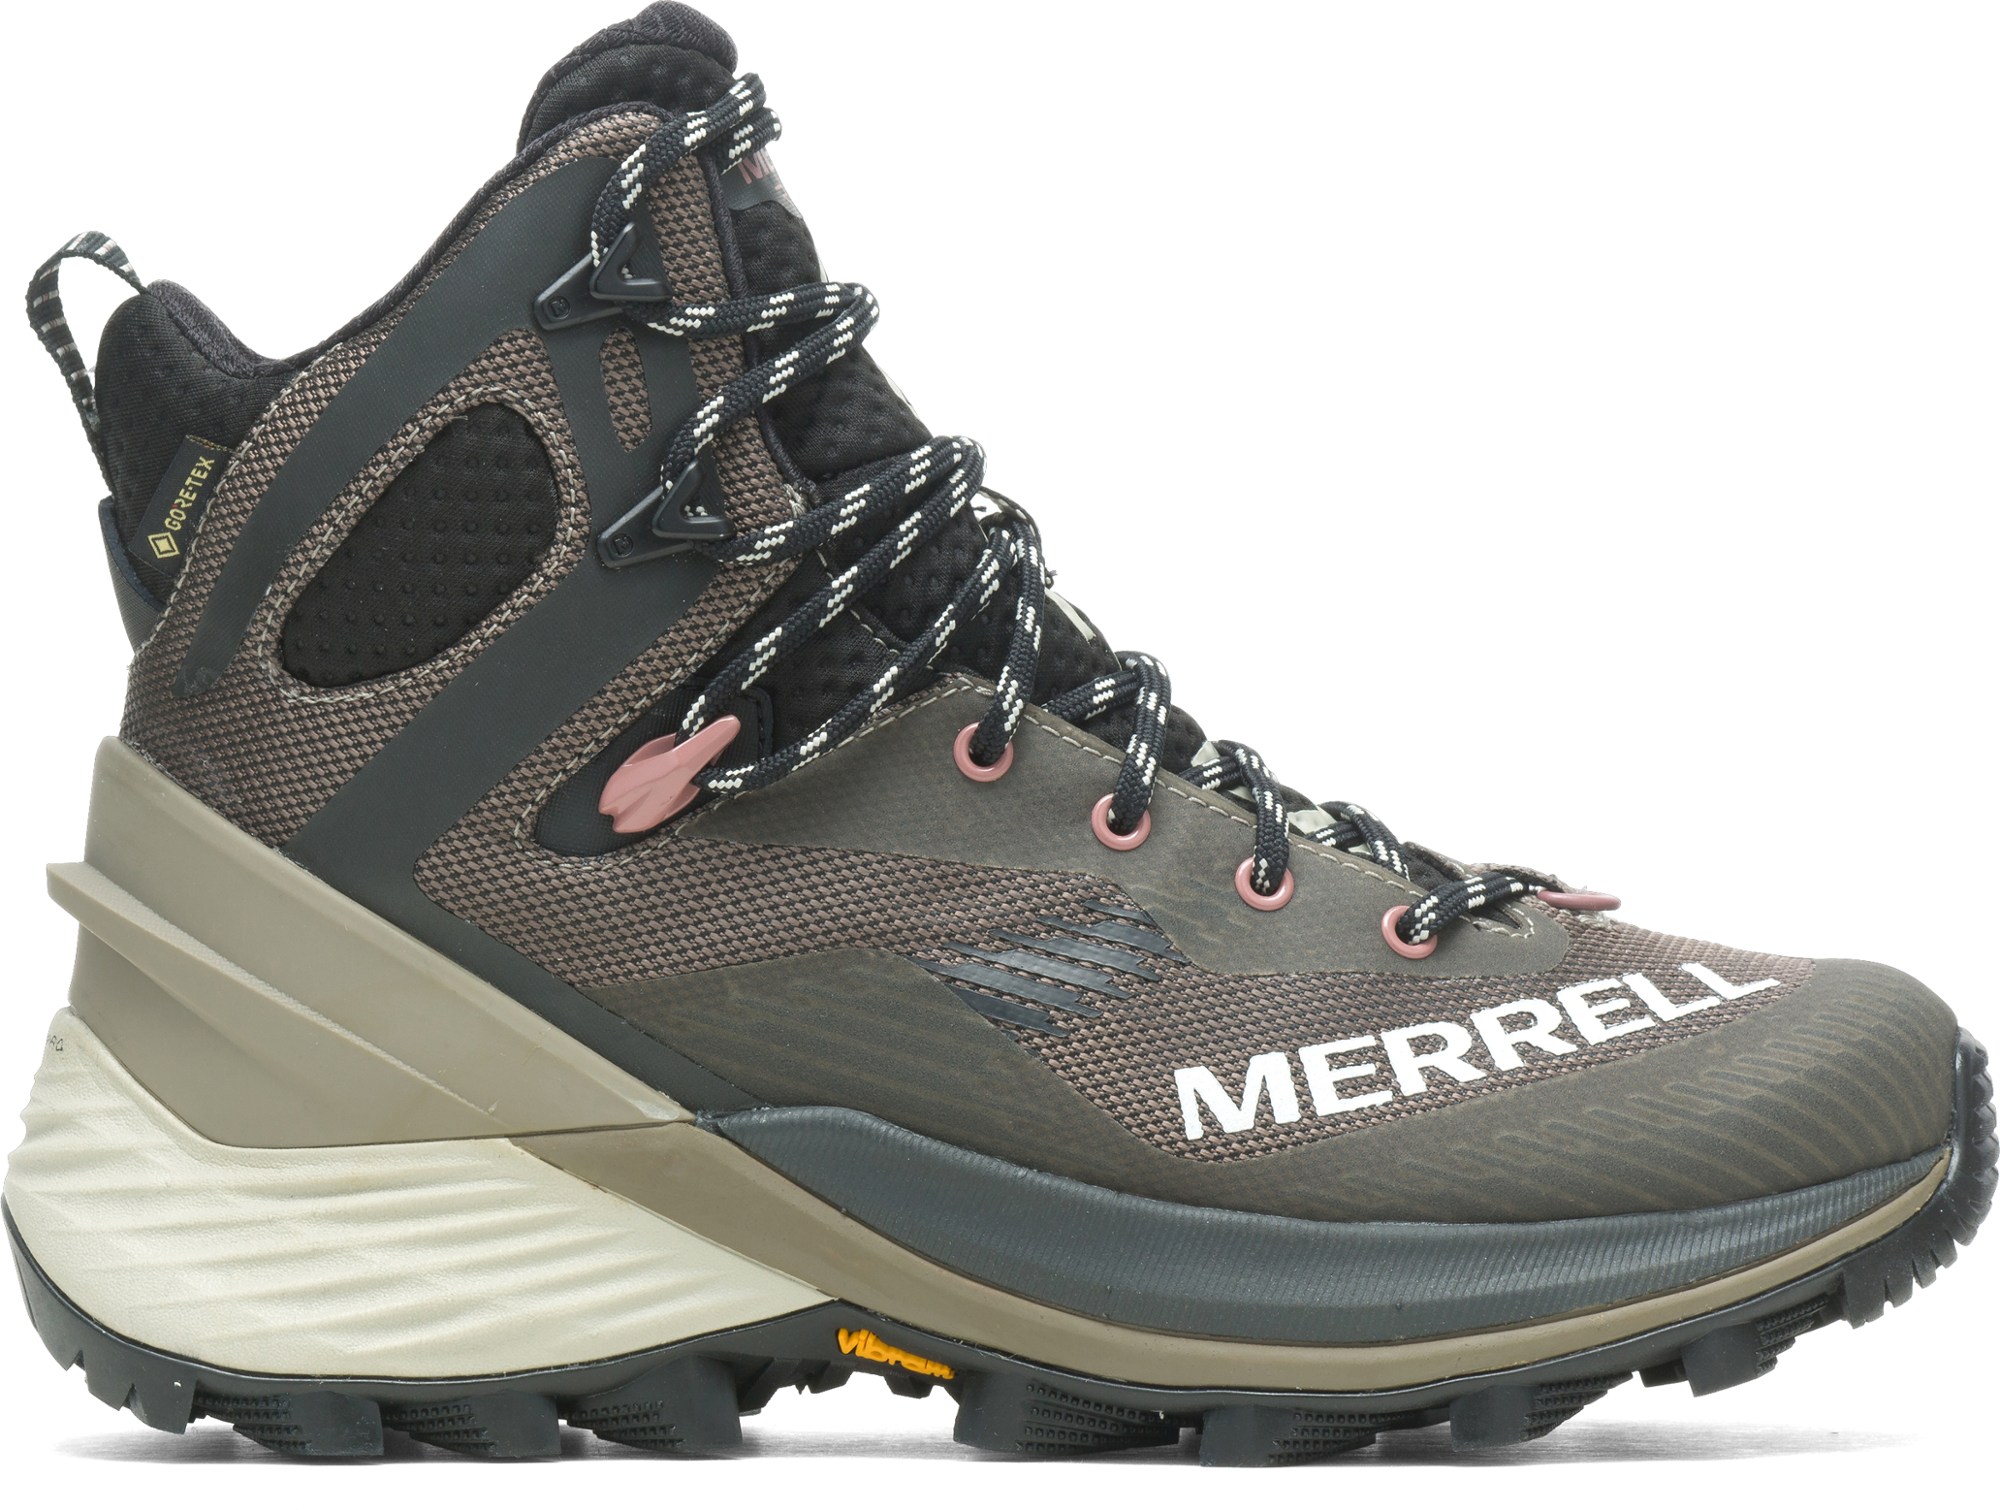 Походные ботинки Rogue Hiker Mid GORE-TEX — женские Merrell, серый